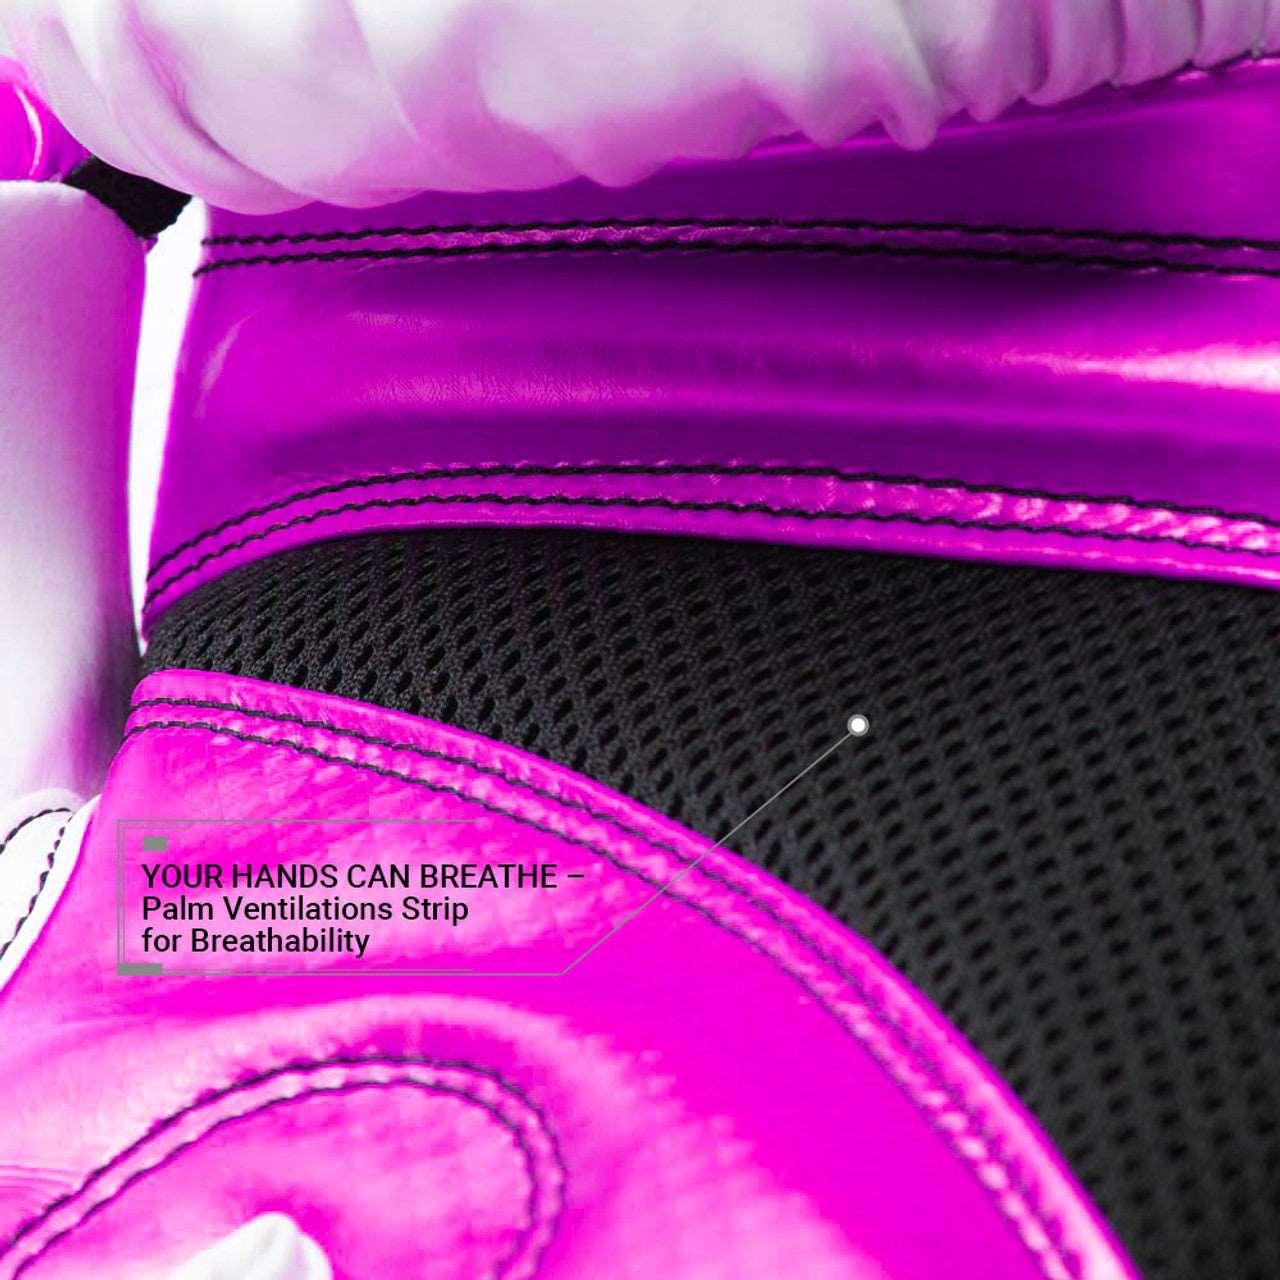 Pinnacle P4 Boxing Gloves - White / Pink - Violent Art Shop